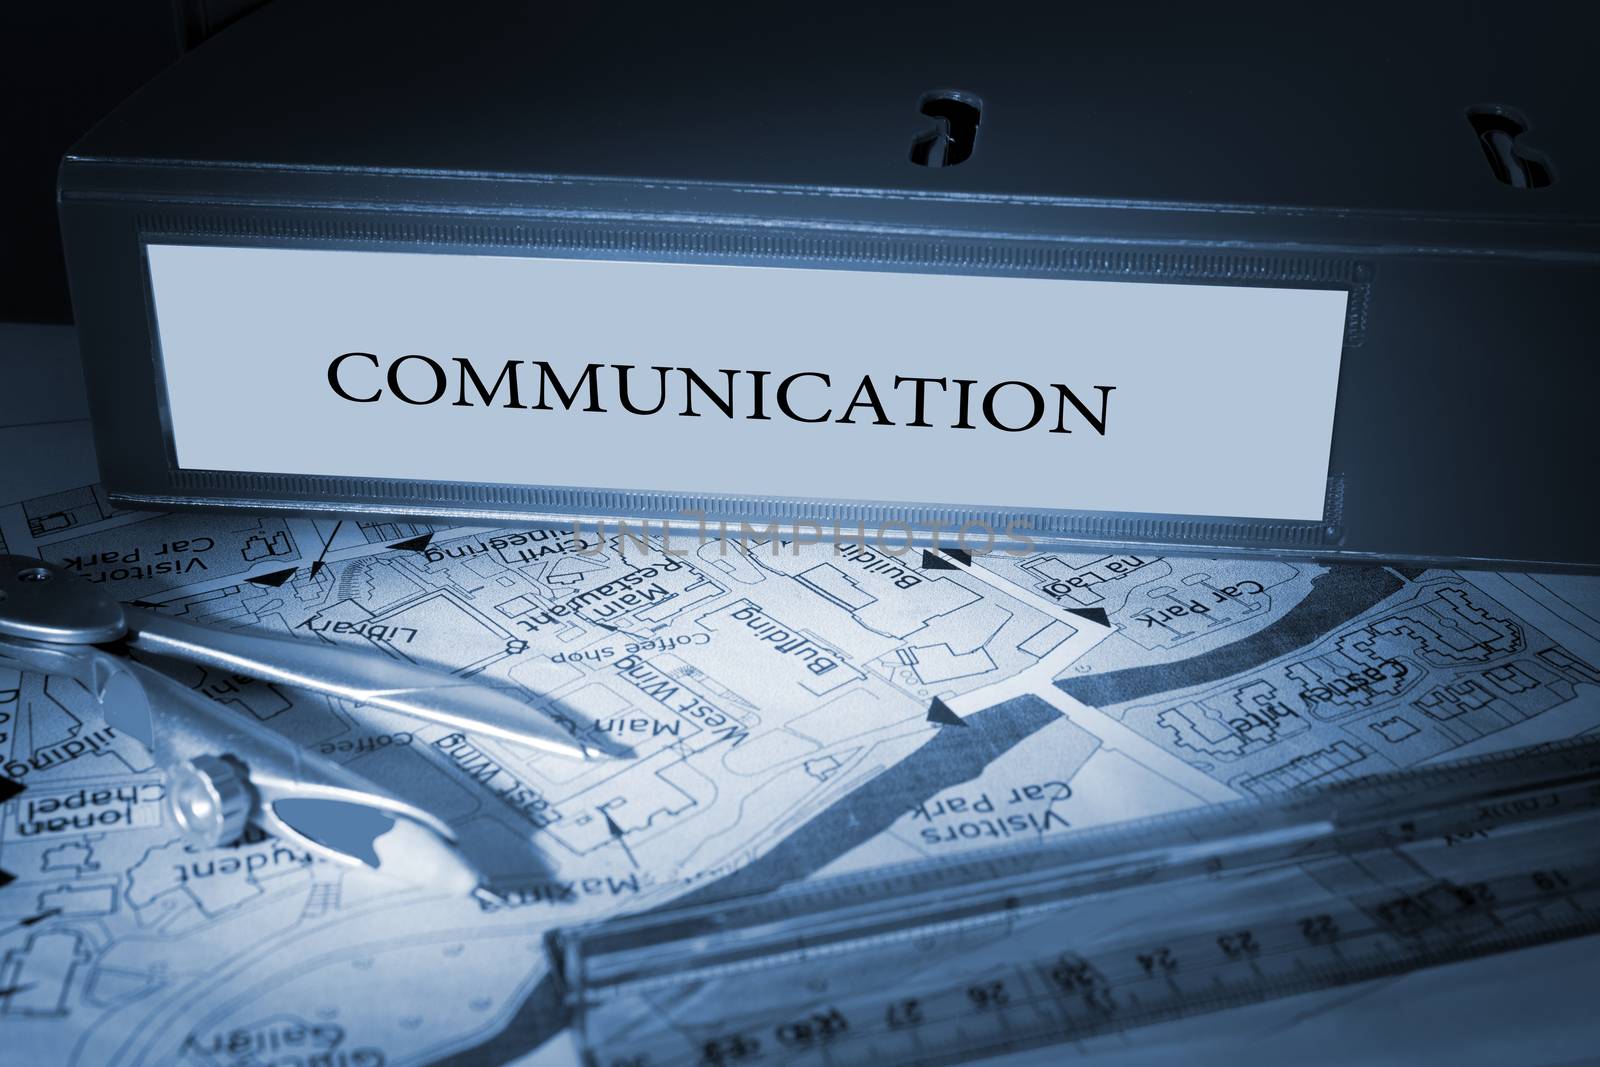 Communication on blue business binder  by Wavebreakmedia